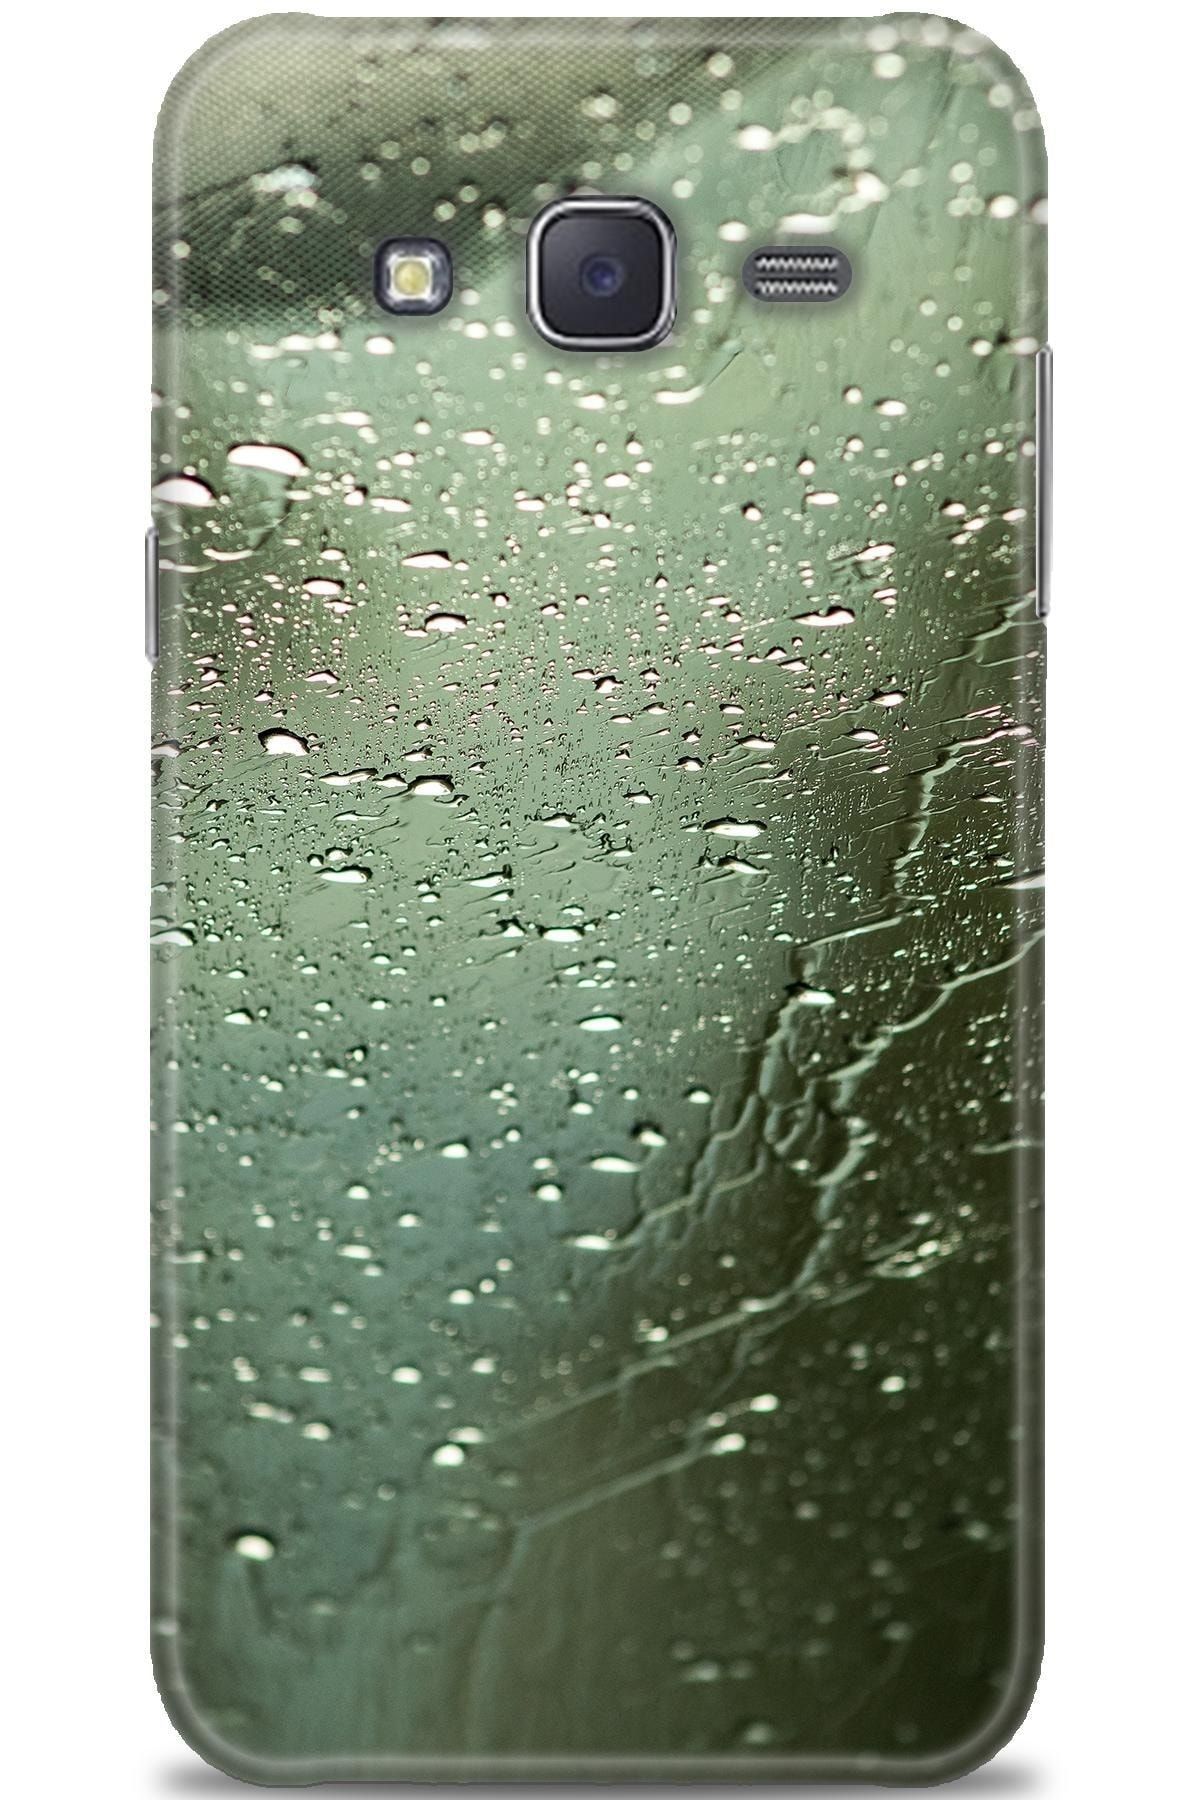 Noprin Samsung Galaxy J5 Kılıf Hd Baskılı Kılıf - Camdaki Yağmur + Nano Micro Ekran Koruyucu